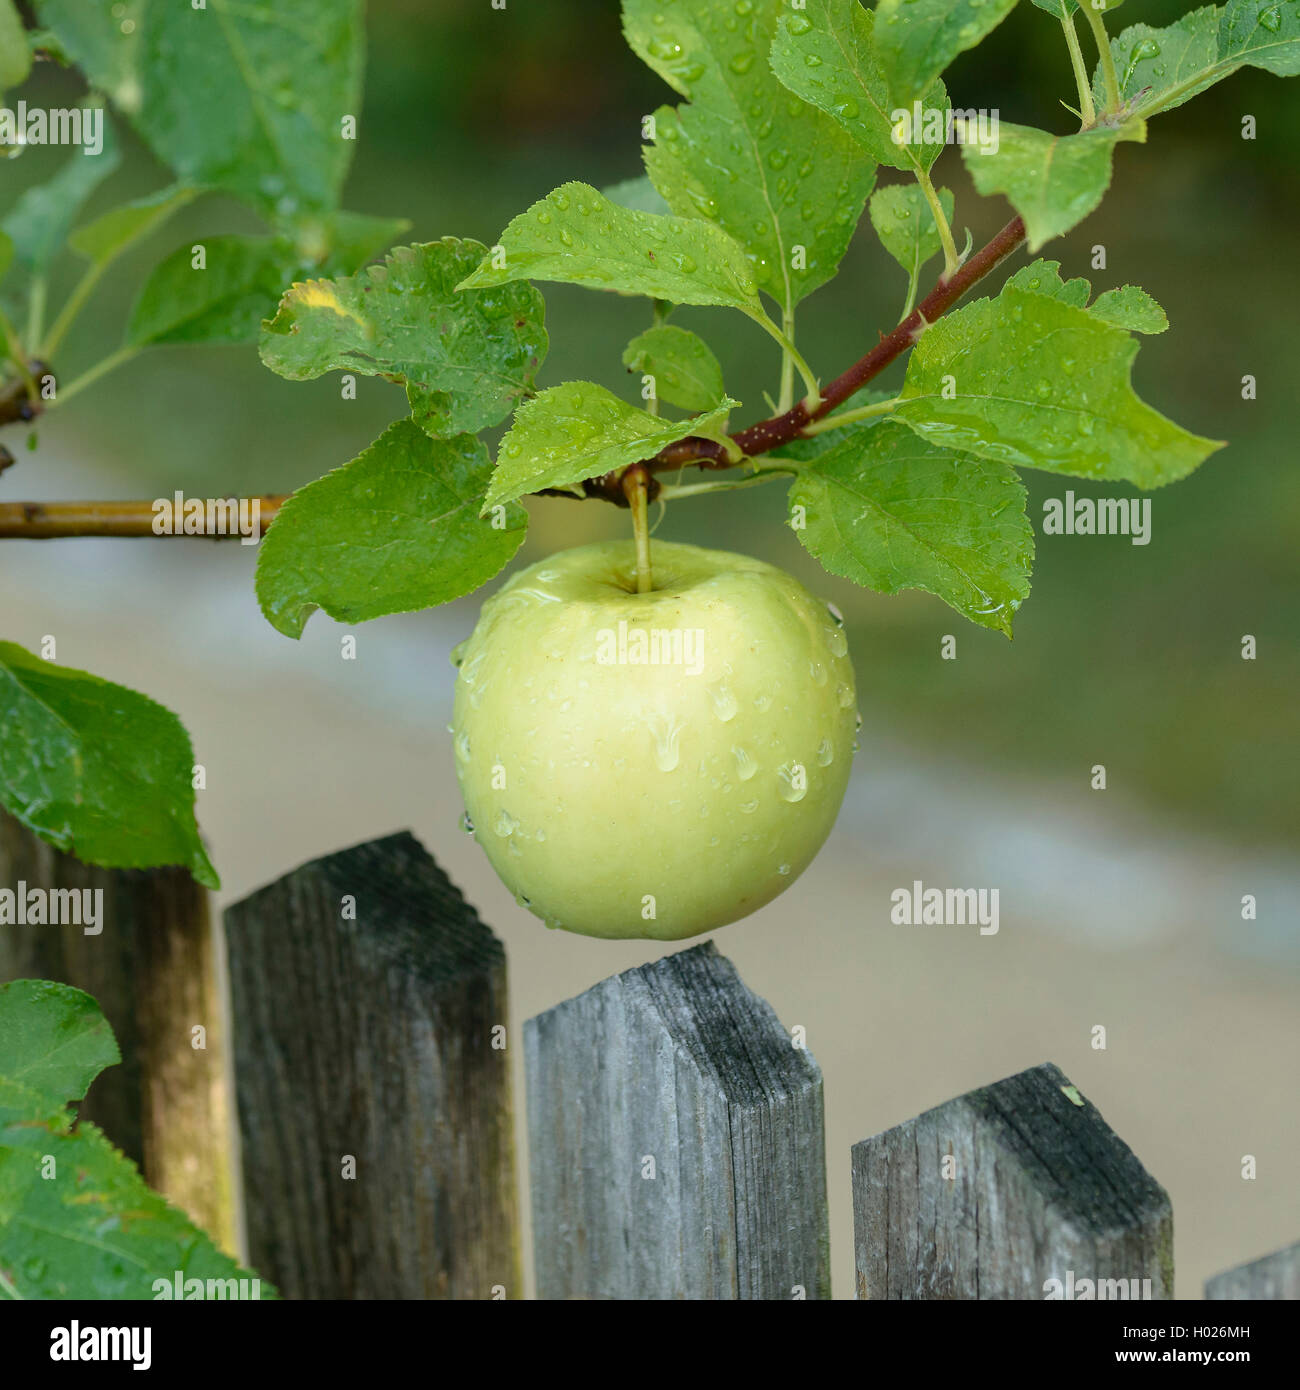 Apple (Malus domestica 'Luna', Malus domestica Luna), le cultivar Luna Banque D'Images